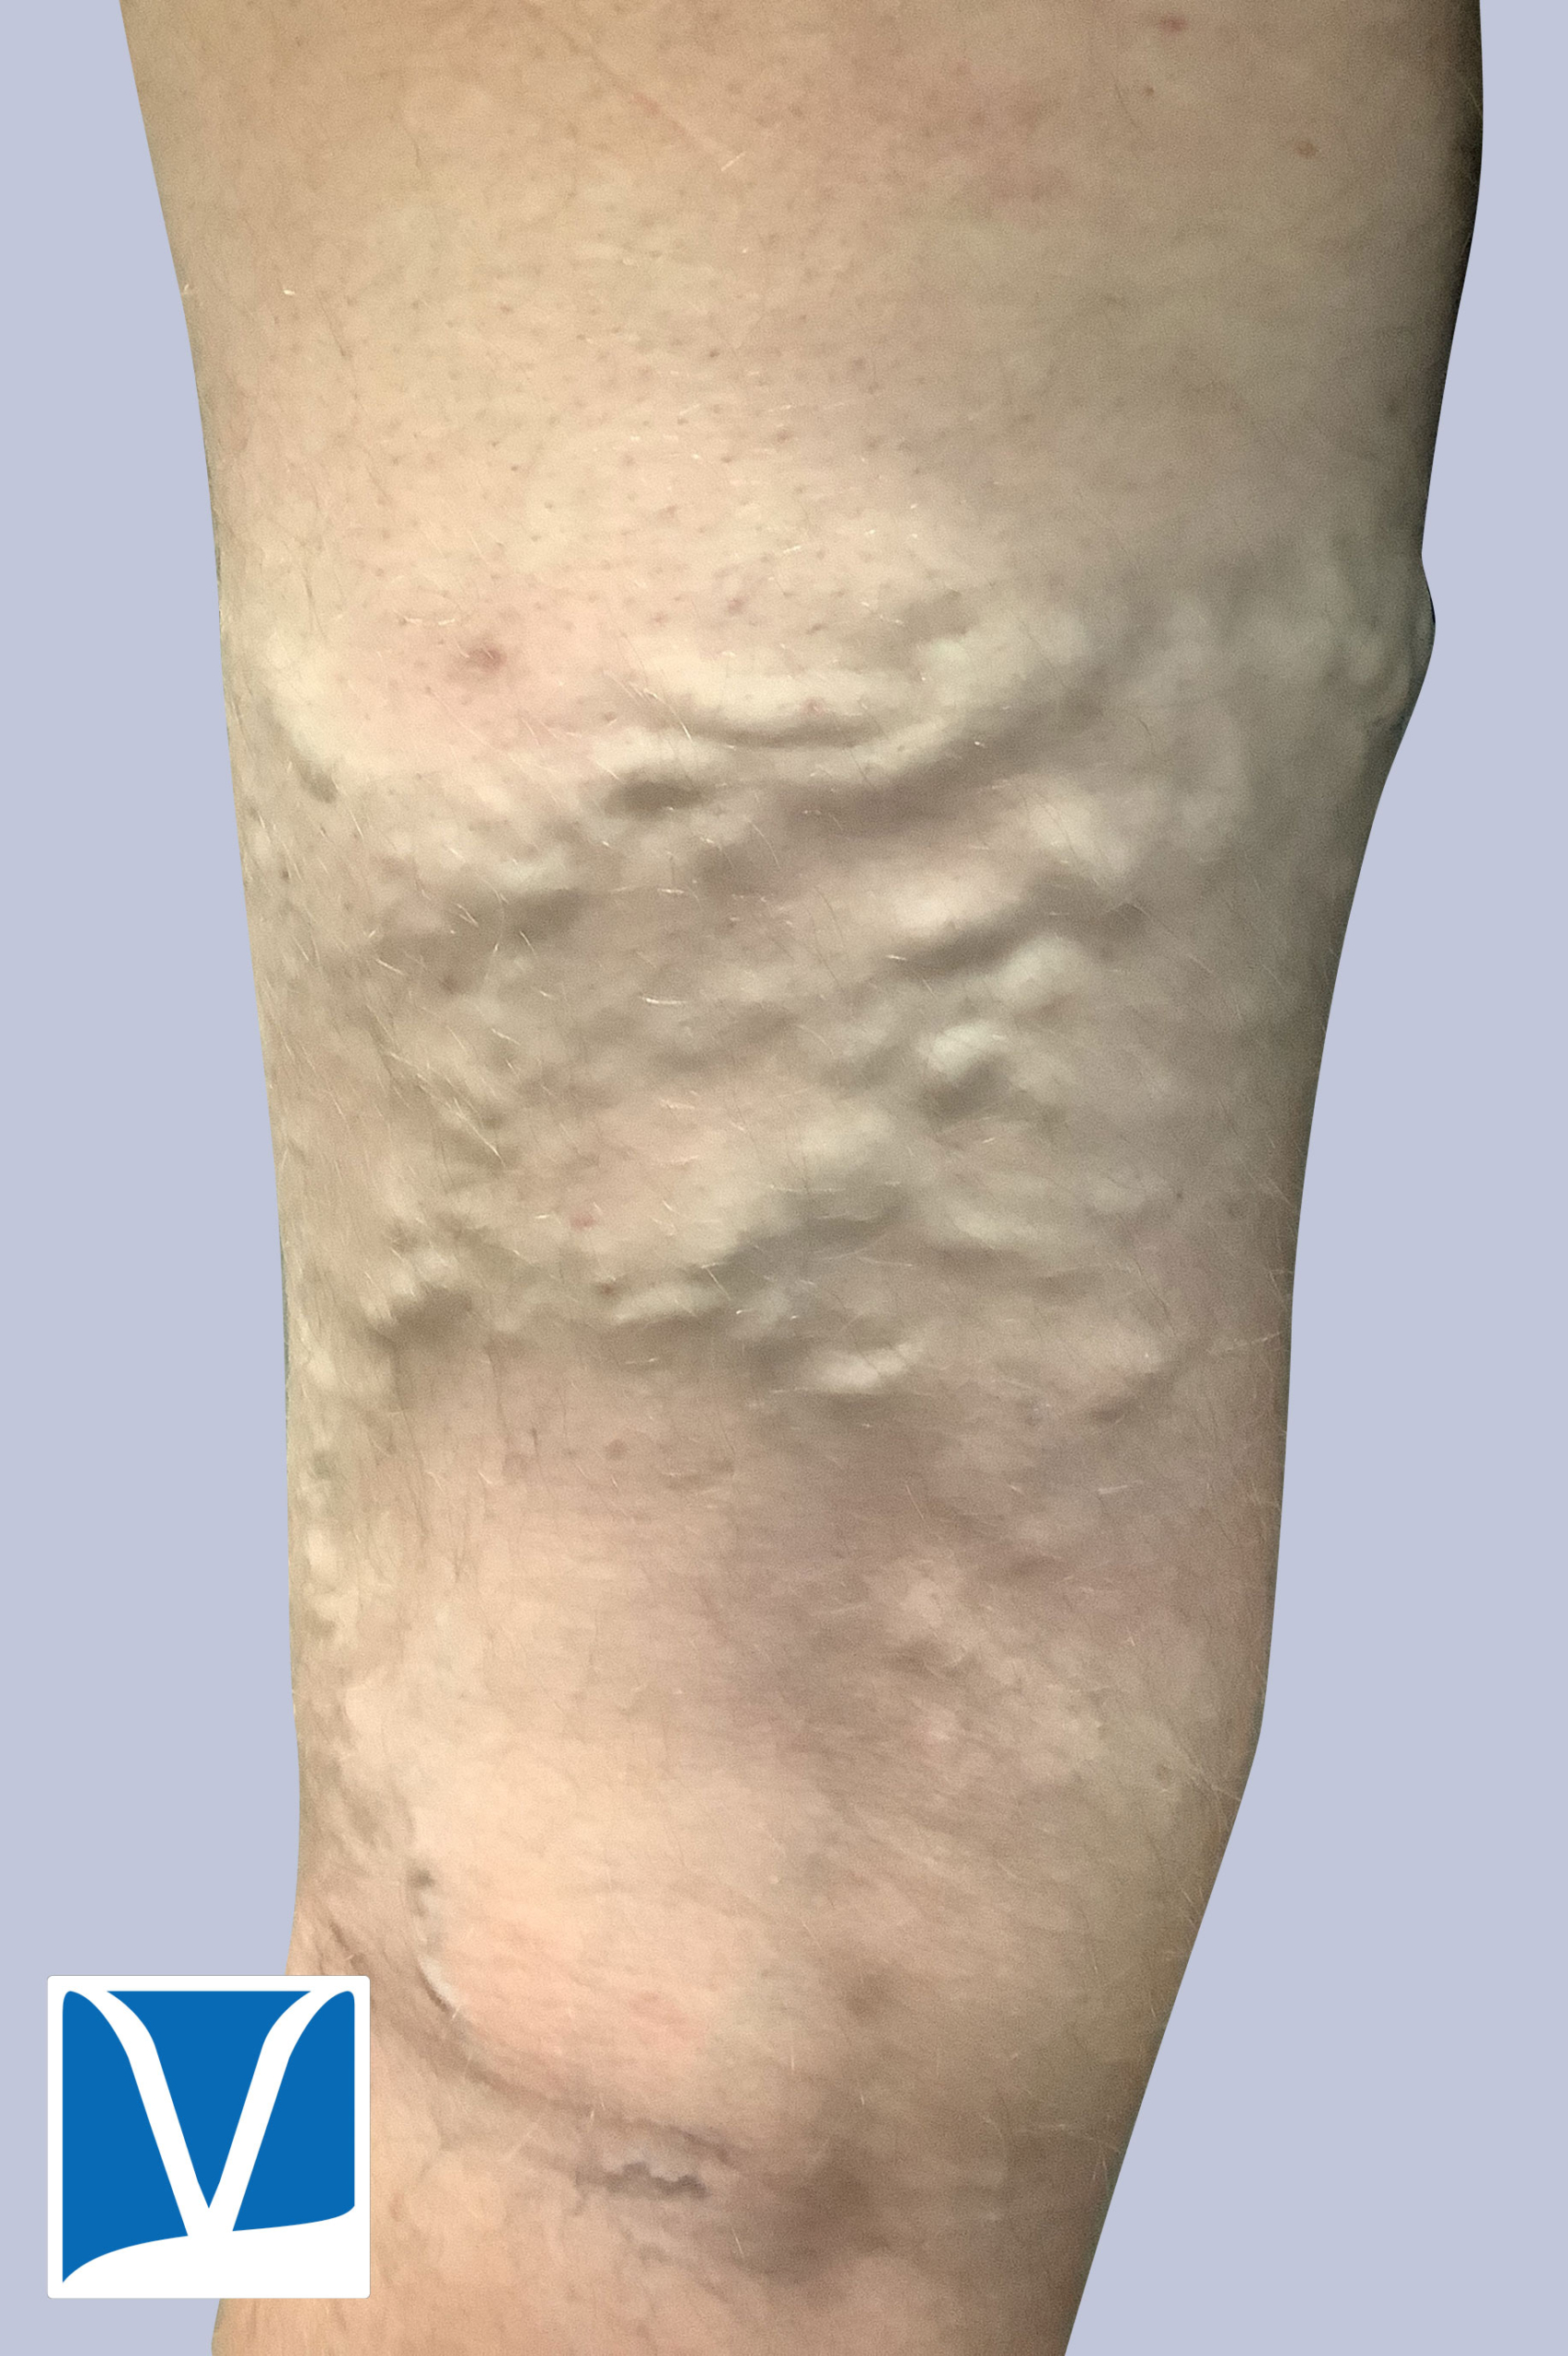 varicose veins before treatment